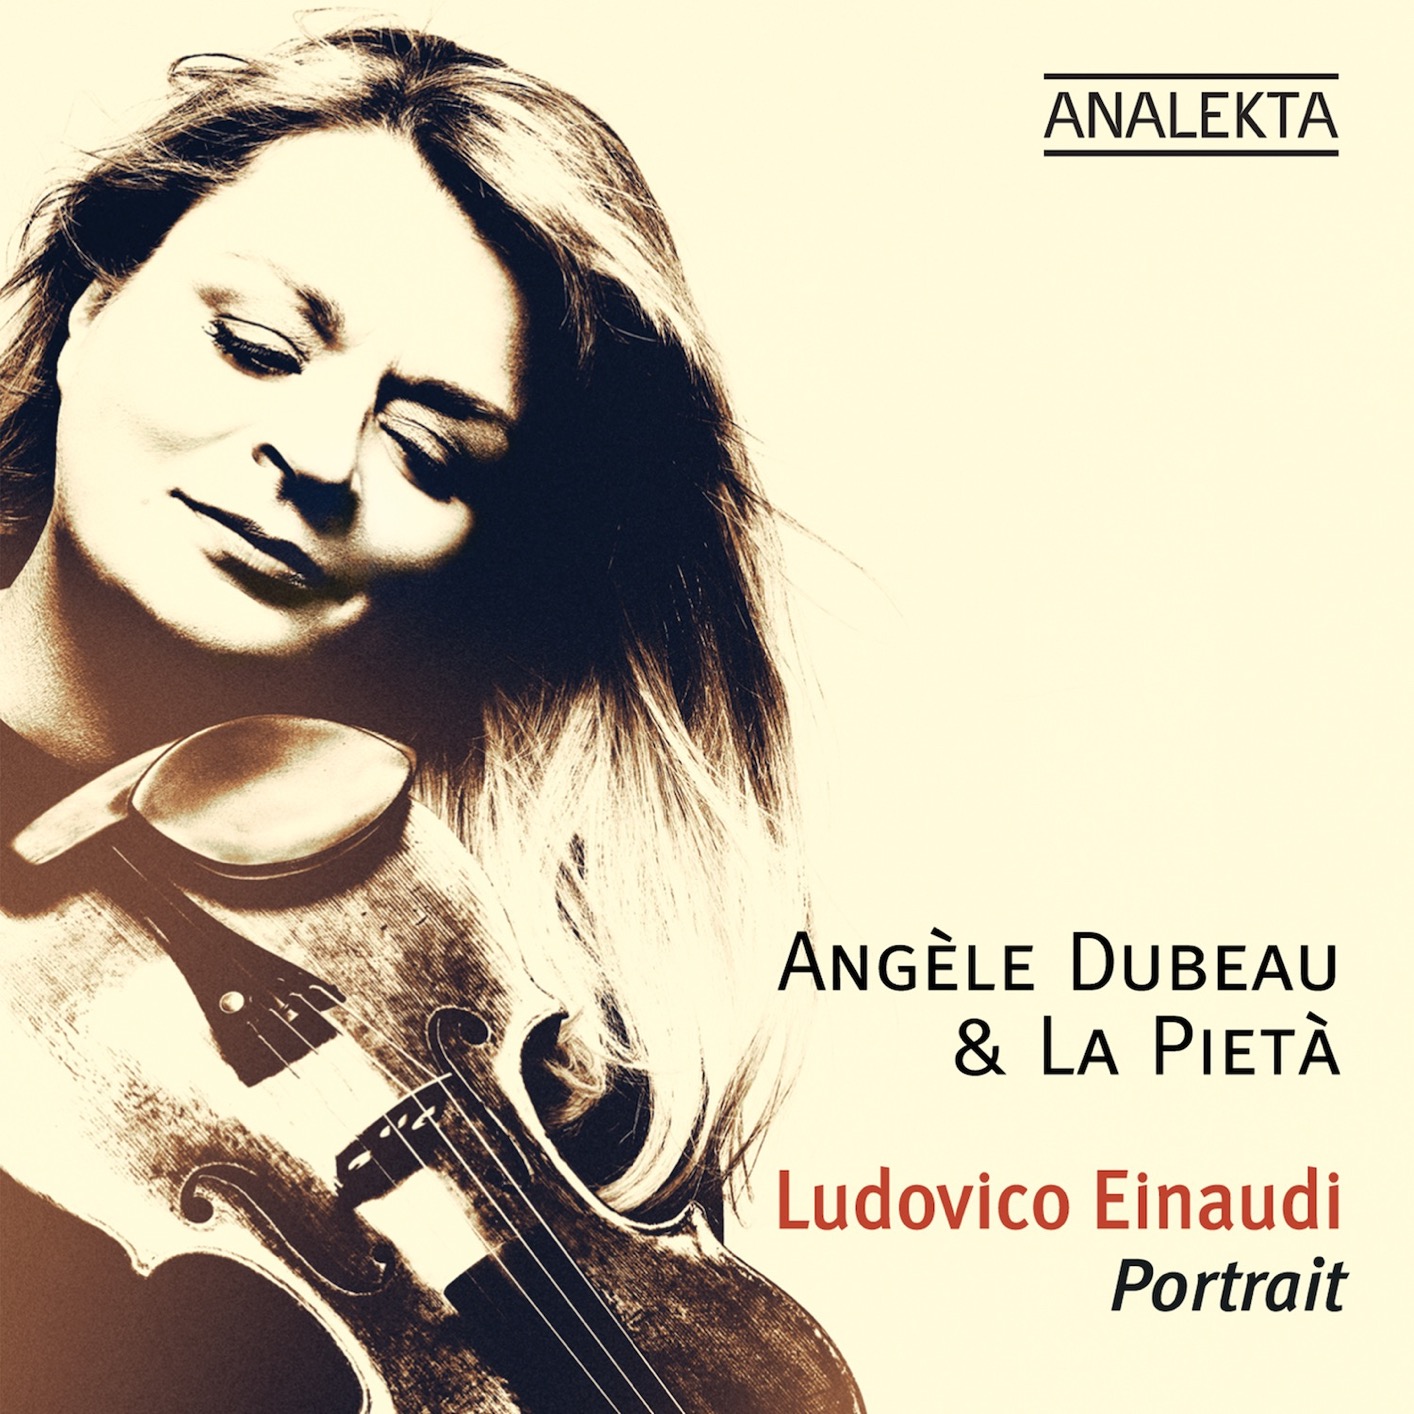 Angele Dubeau & La Pieta - Ludovico Einaudi: Portrait (Deluxe Edition) (2019) [FLAC 24bit/96kHz]